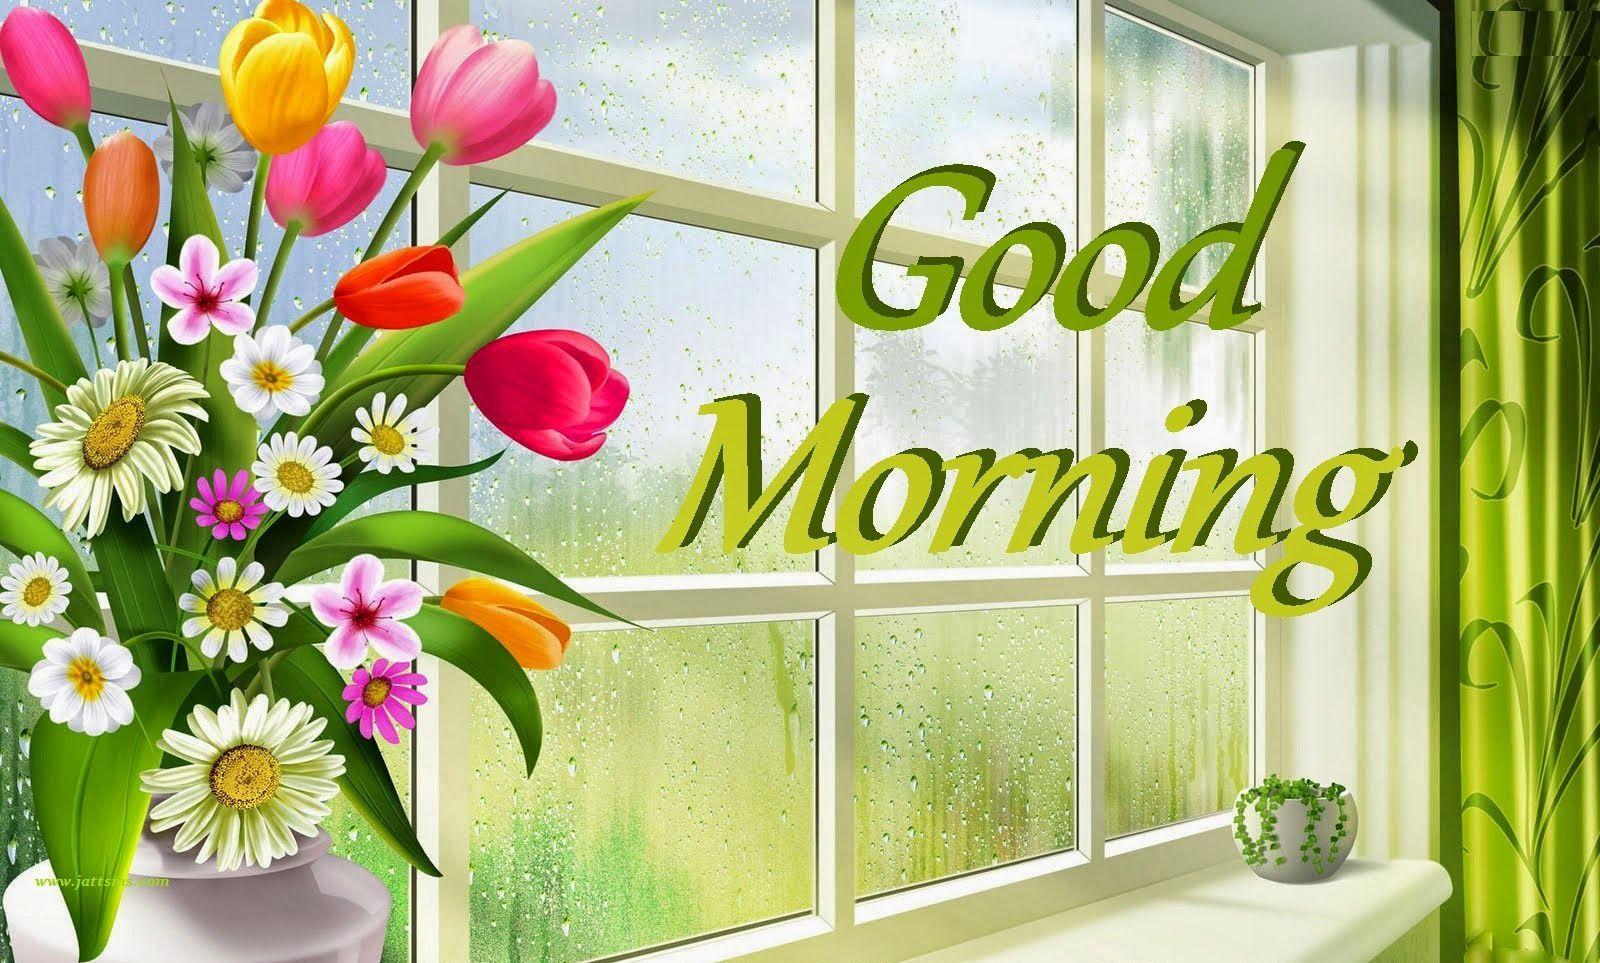 Good morning wallpaper for facebook download. Good morning wallpaper, Happy good morning image, Good morning image flowers